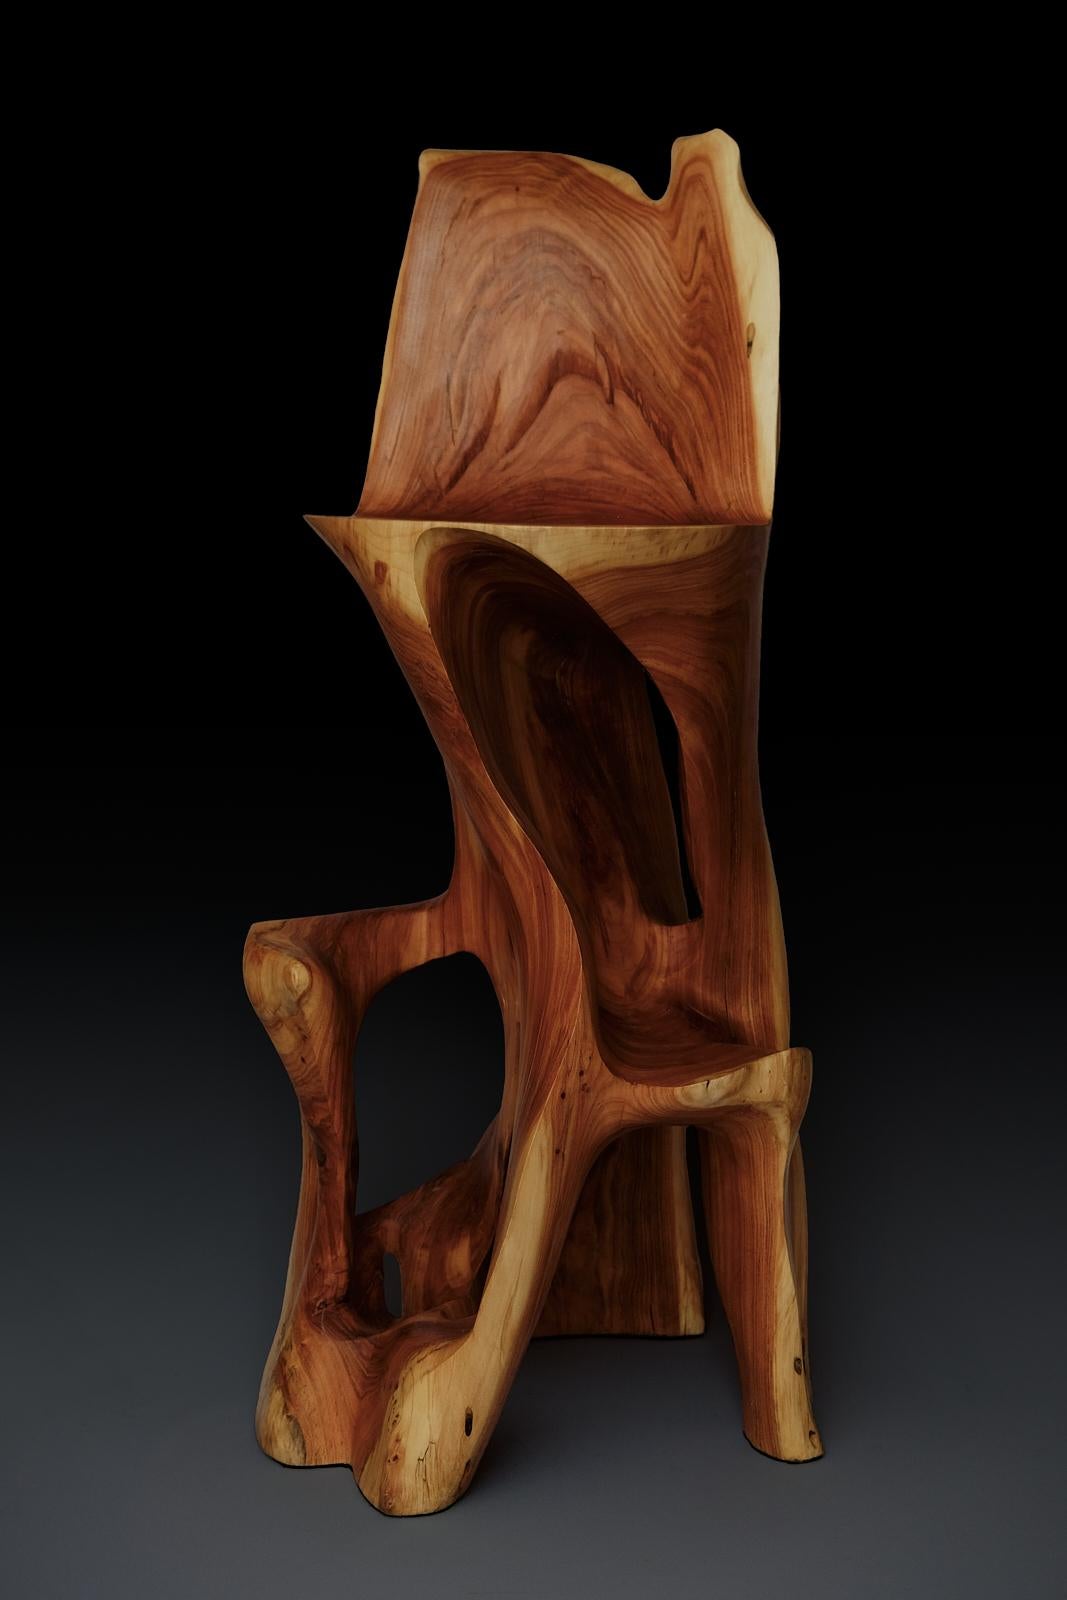 Makha, Solid Wood Sculptural Bar Chair, Original Contemporary Design, Logniture For Sale 6